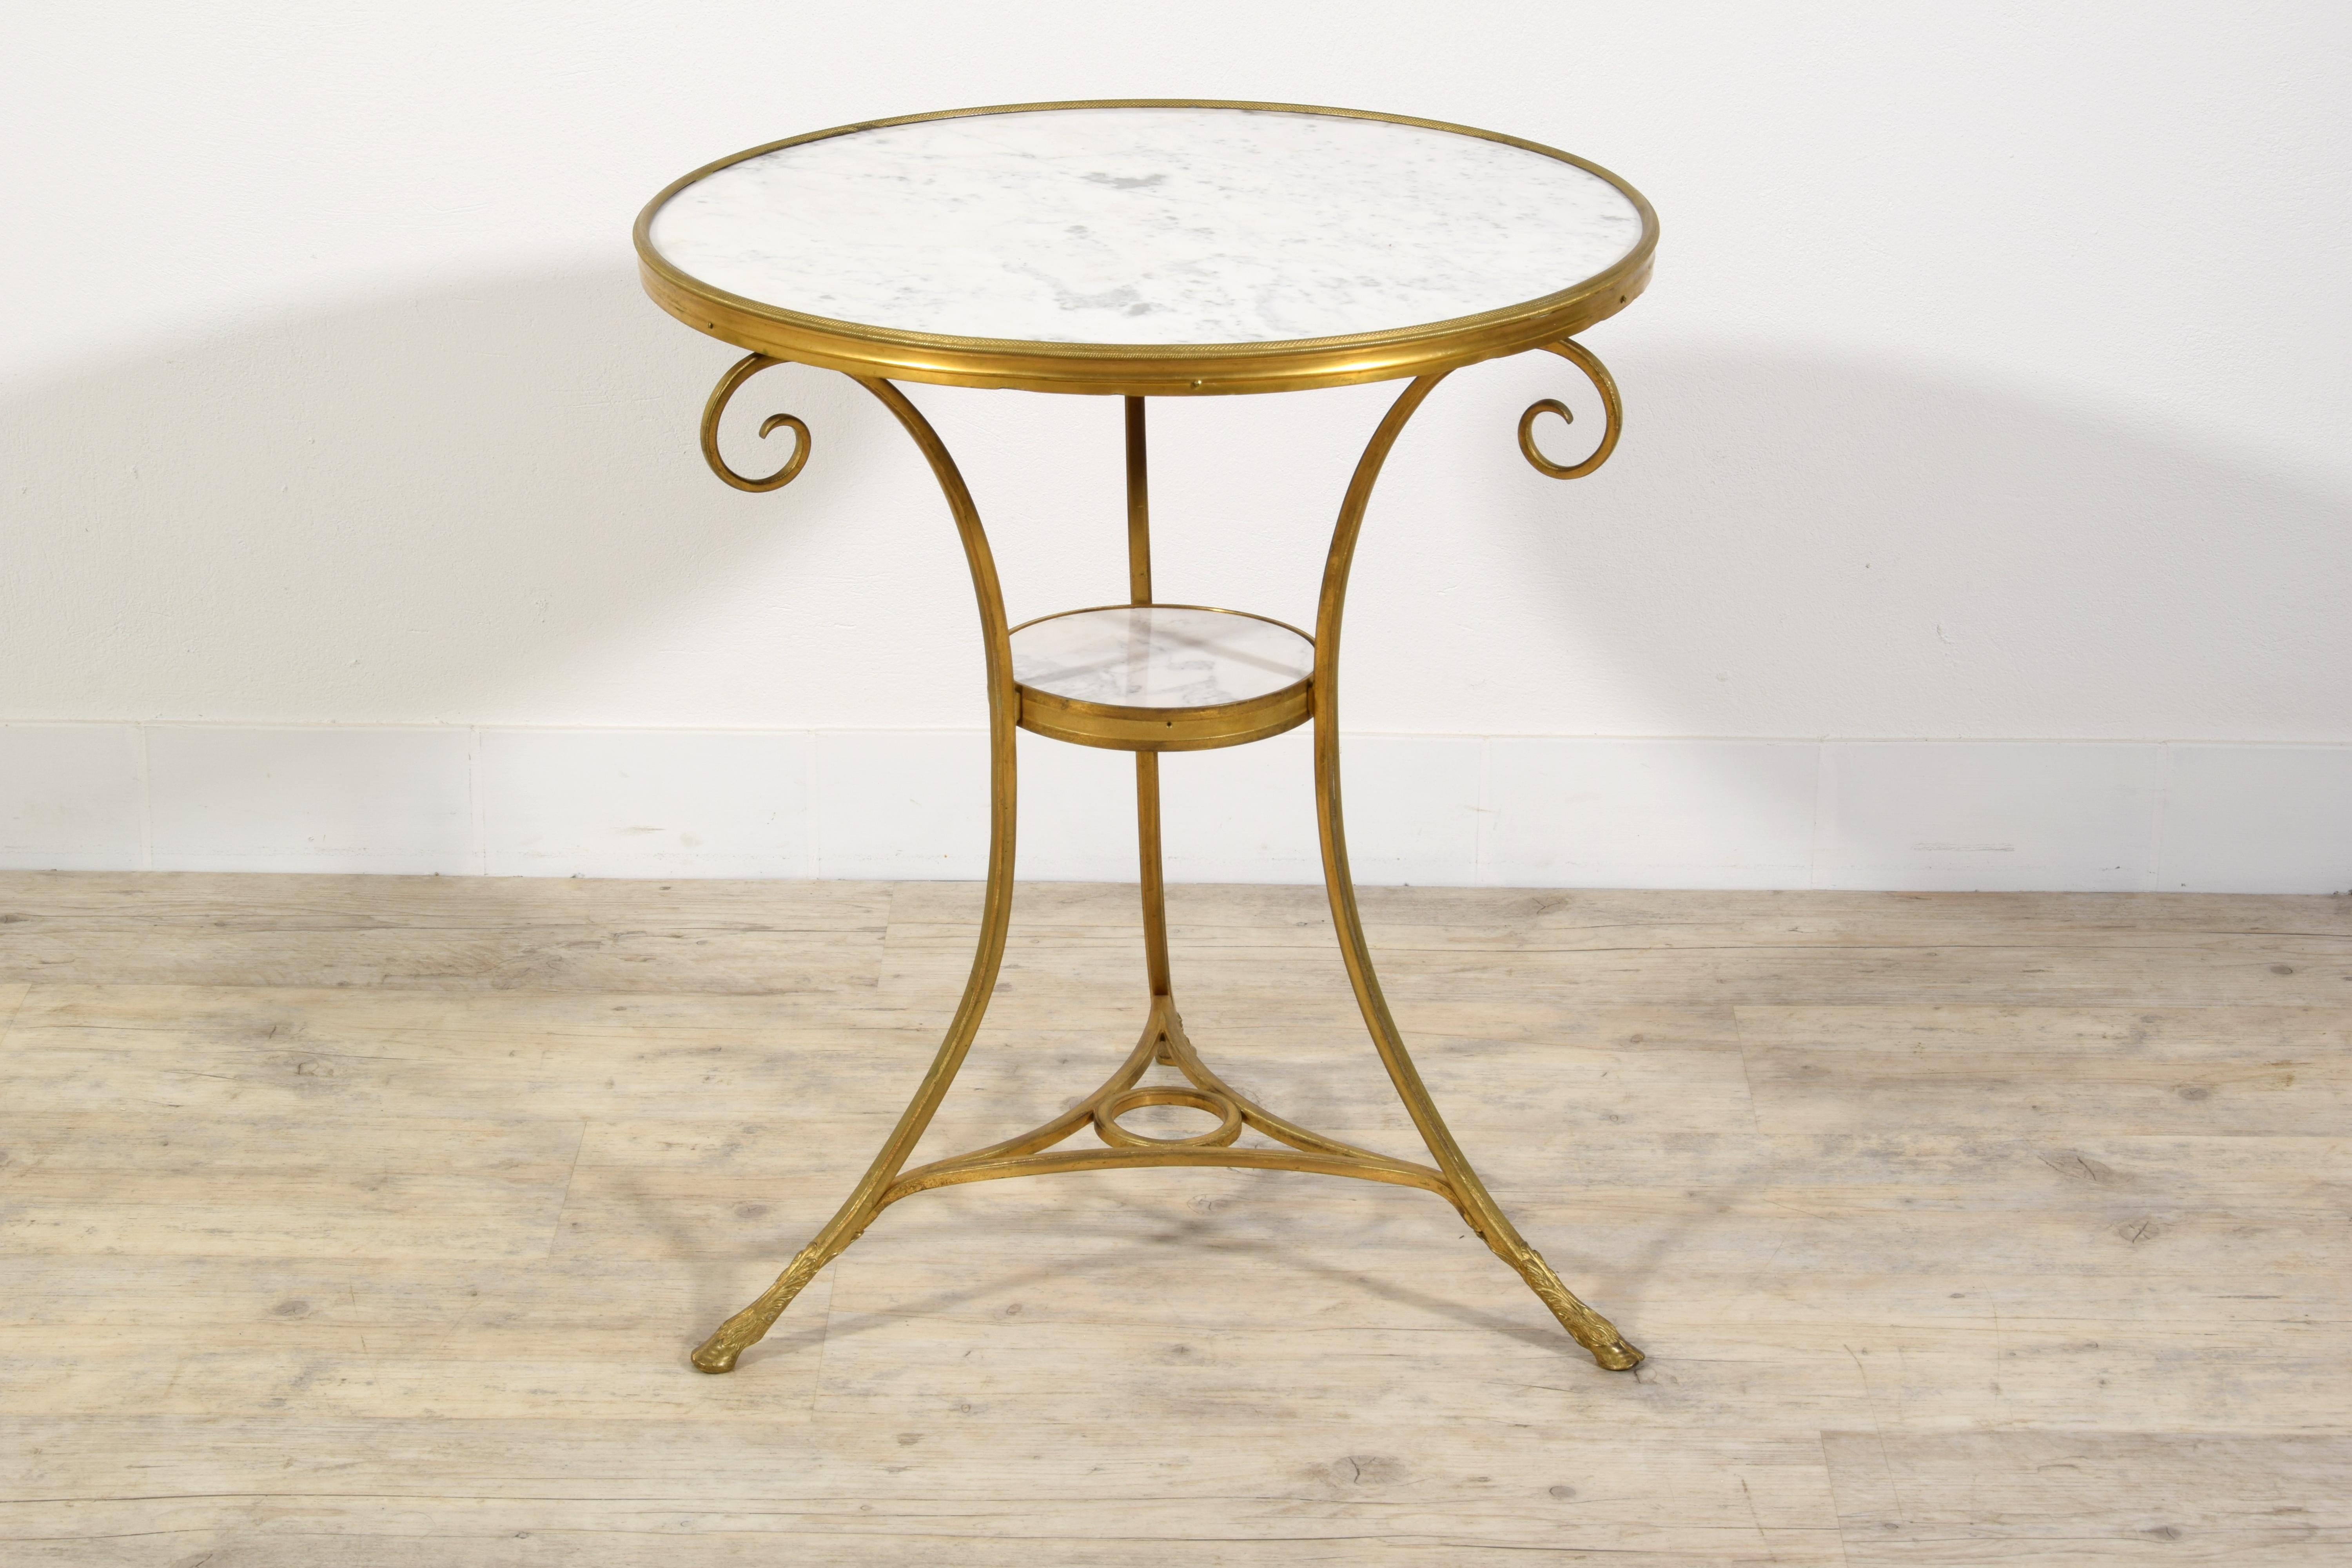 19th Century, Louis XVI Style French Gilt Bronze Tripod Coffee Table or Guéridon For Sale 10